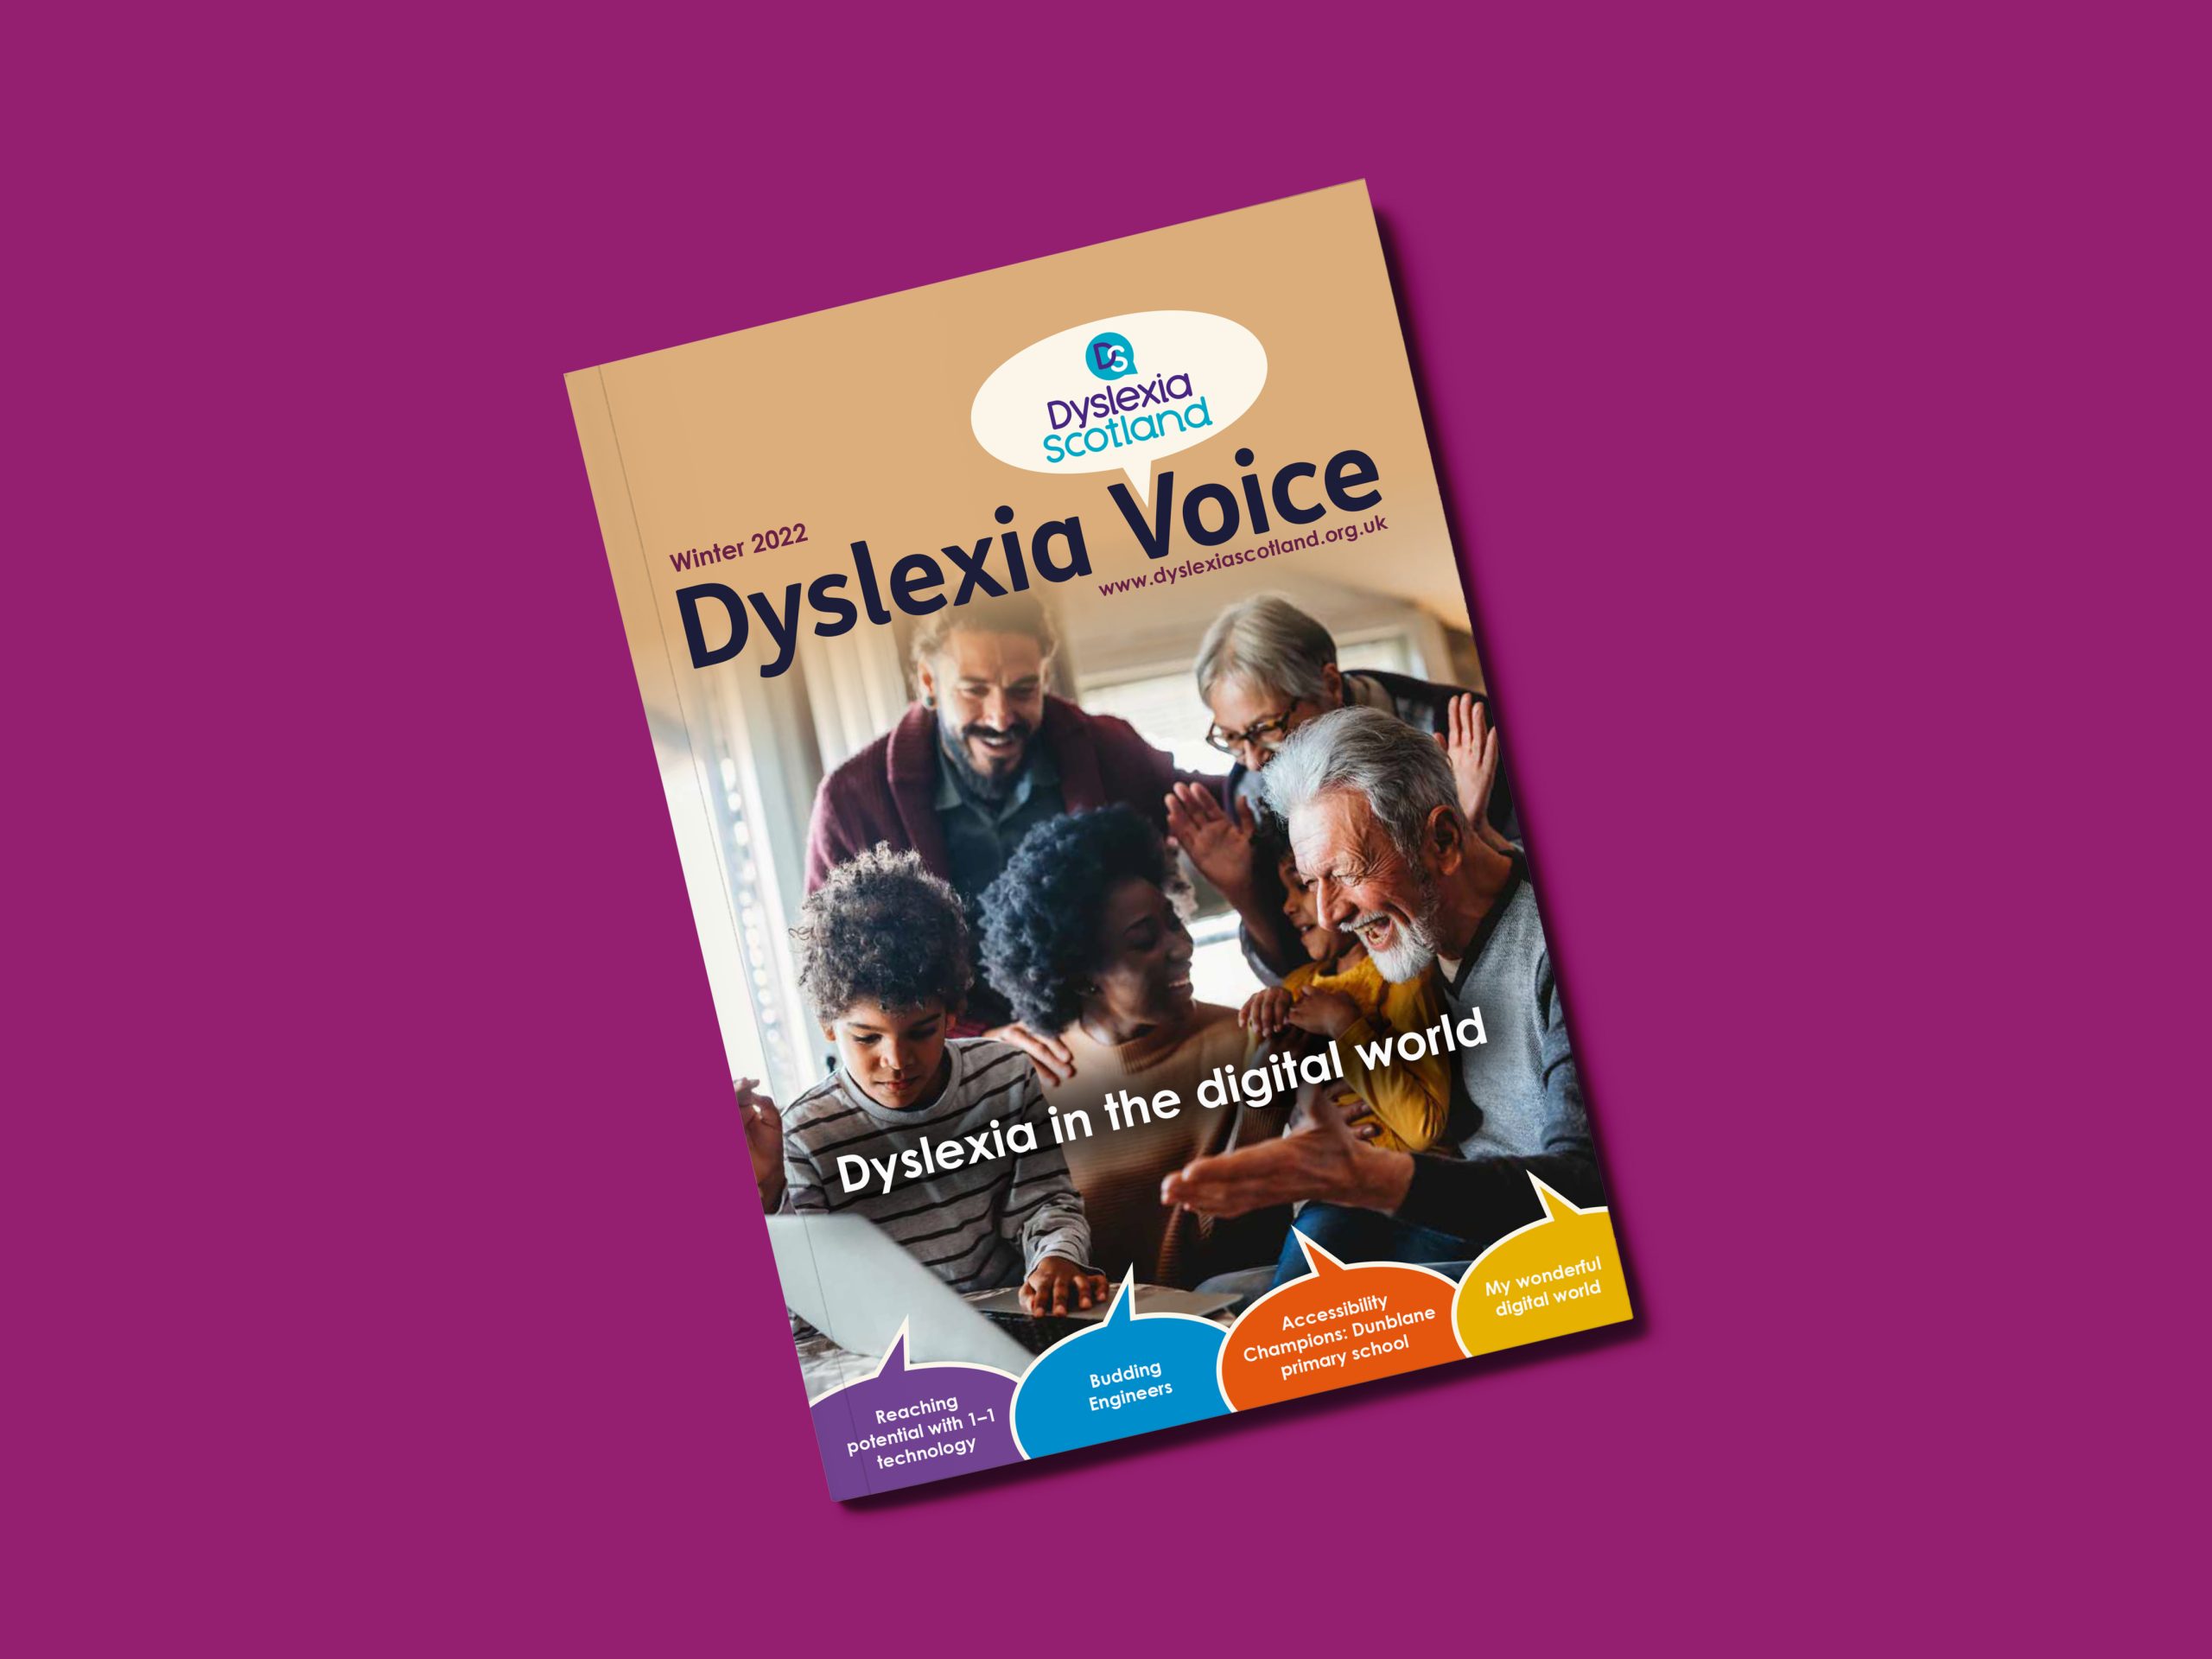 Dyslexia Voice magazine against a berry-coloured background.